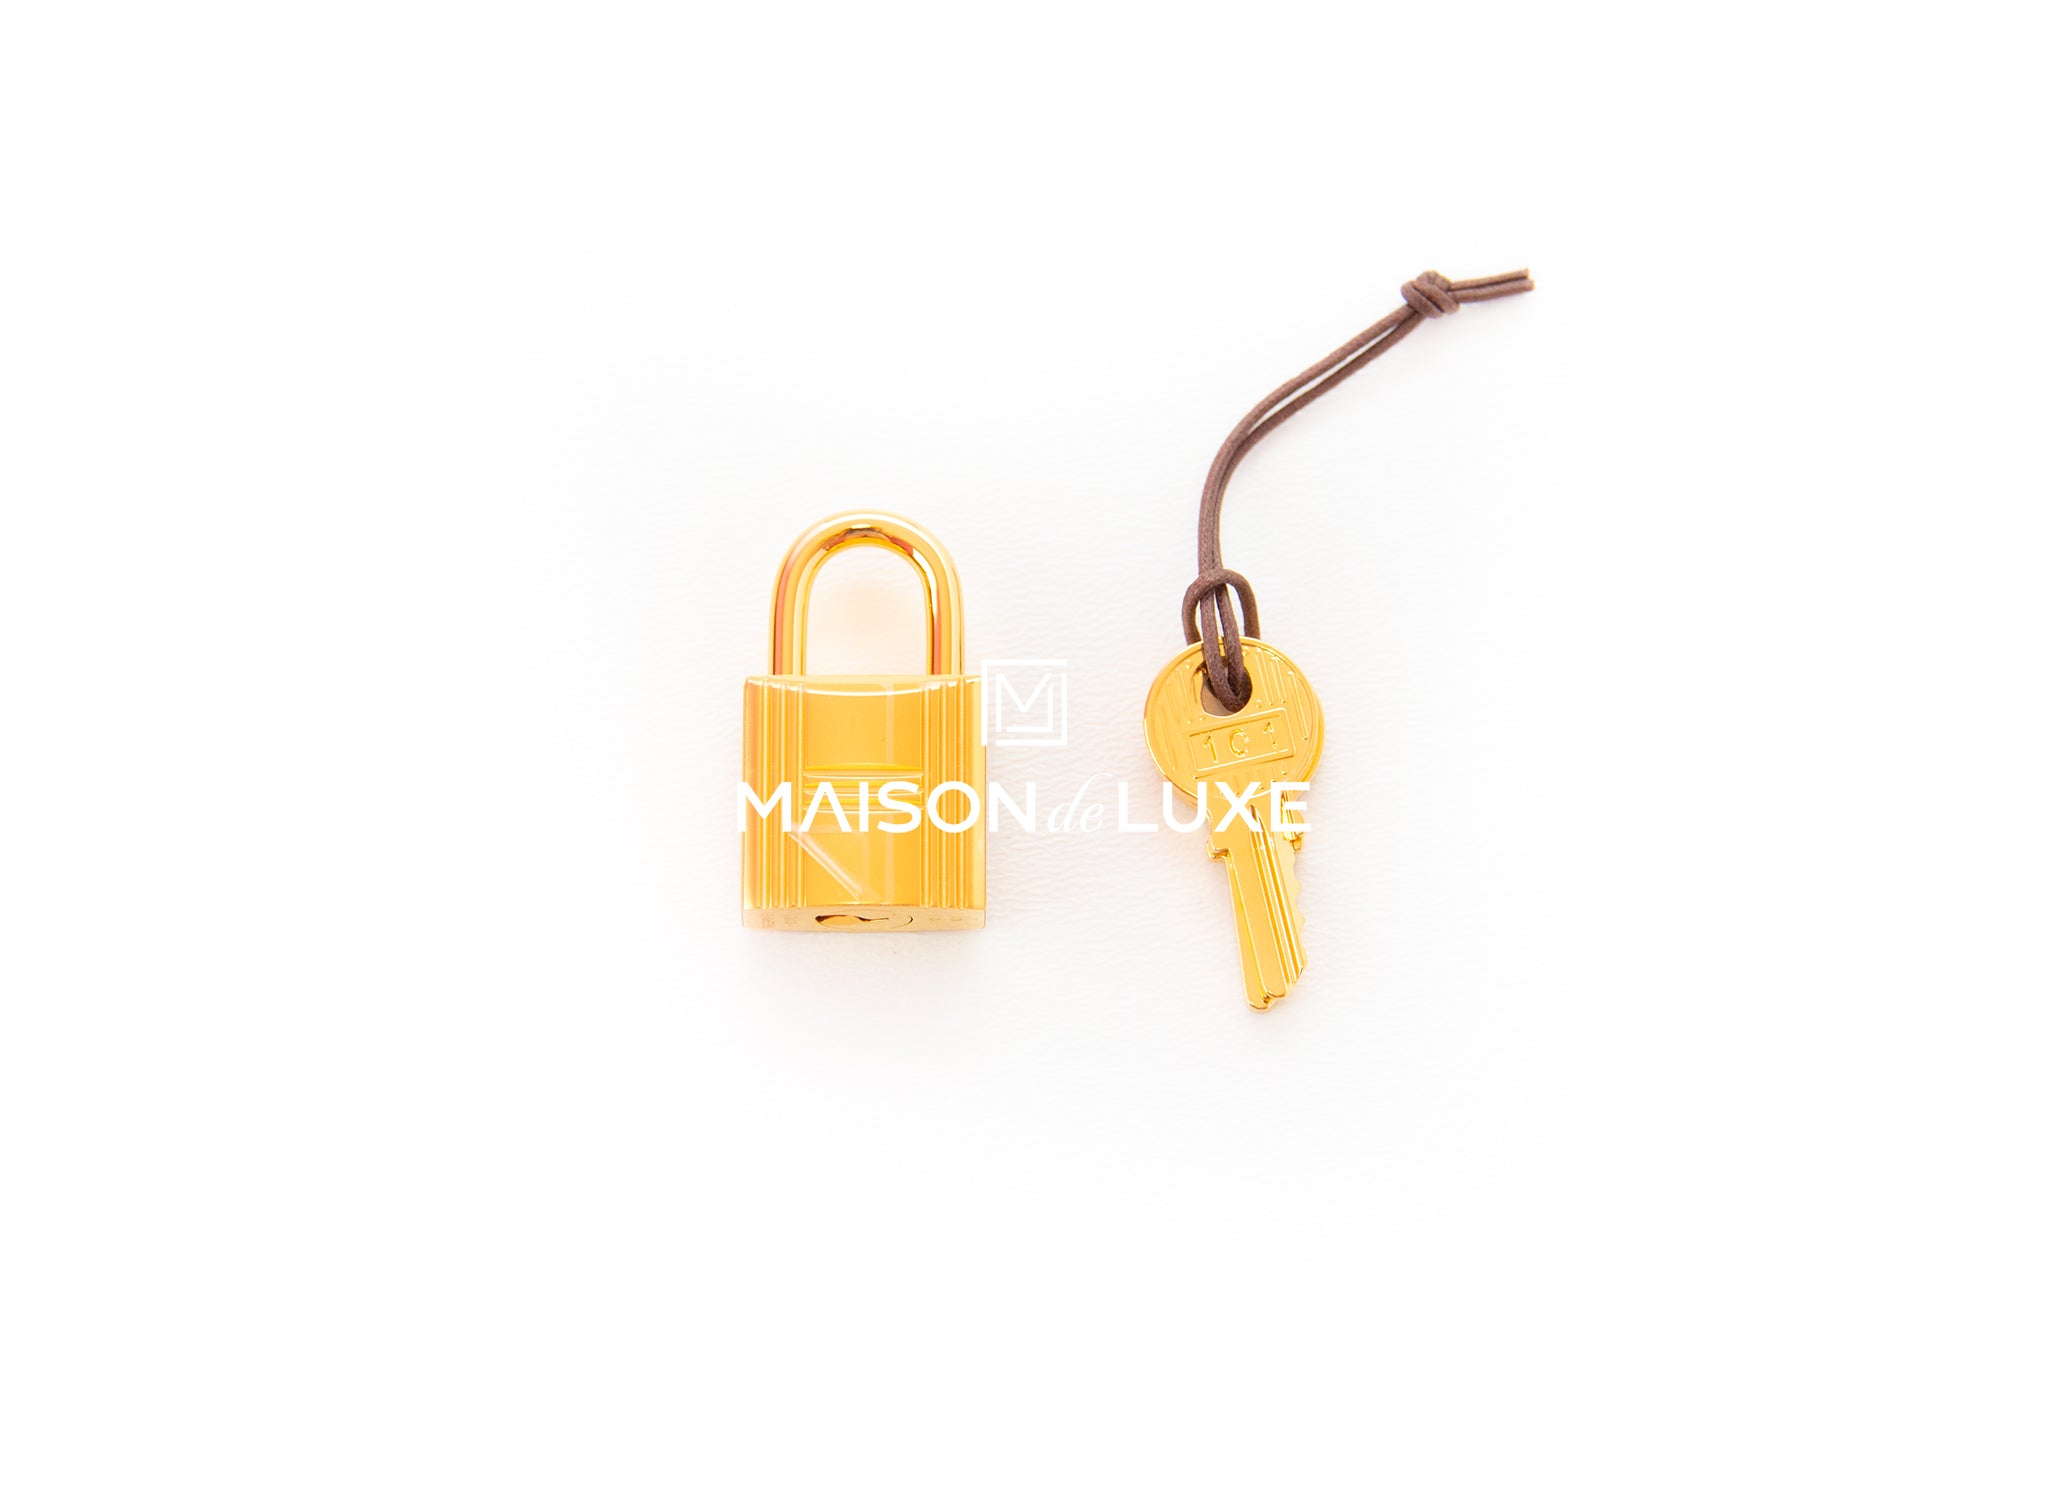 Hermes Small Gold Padlock & Keys